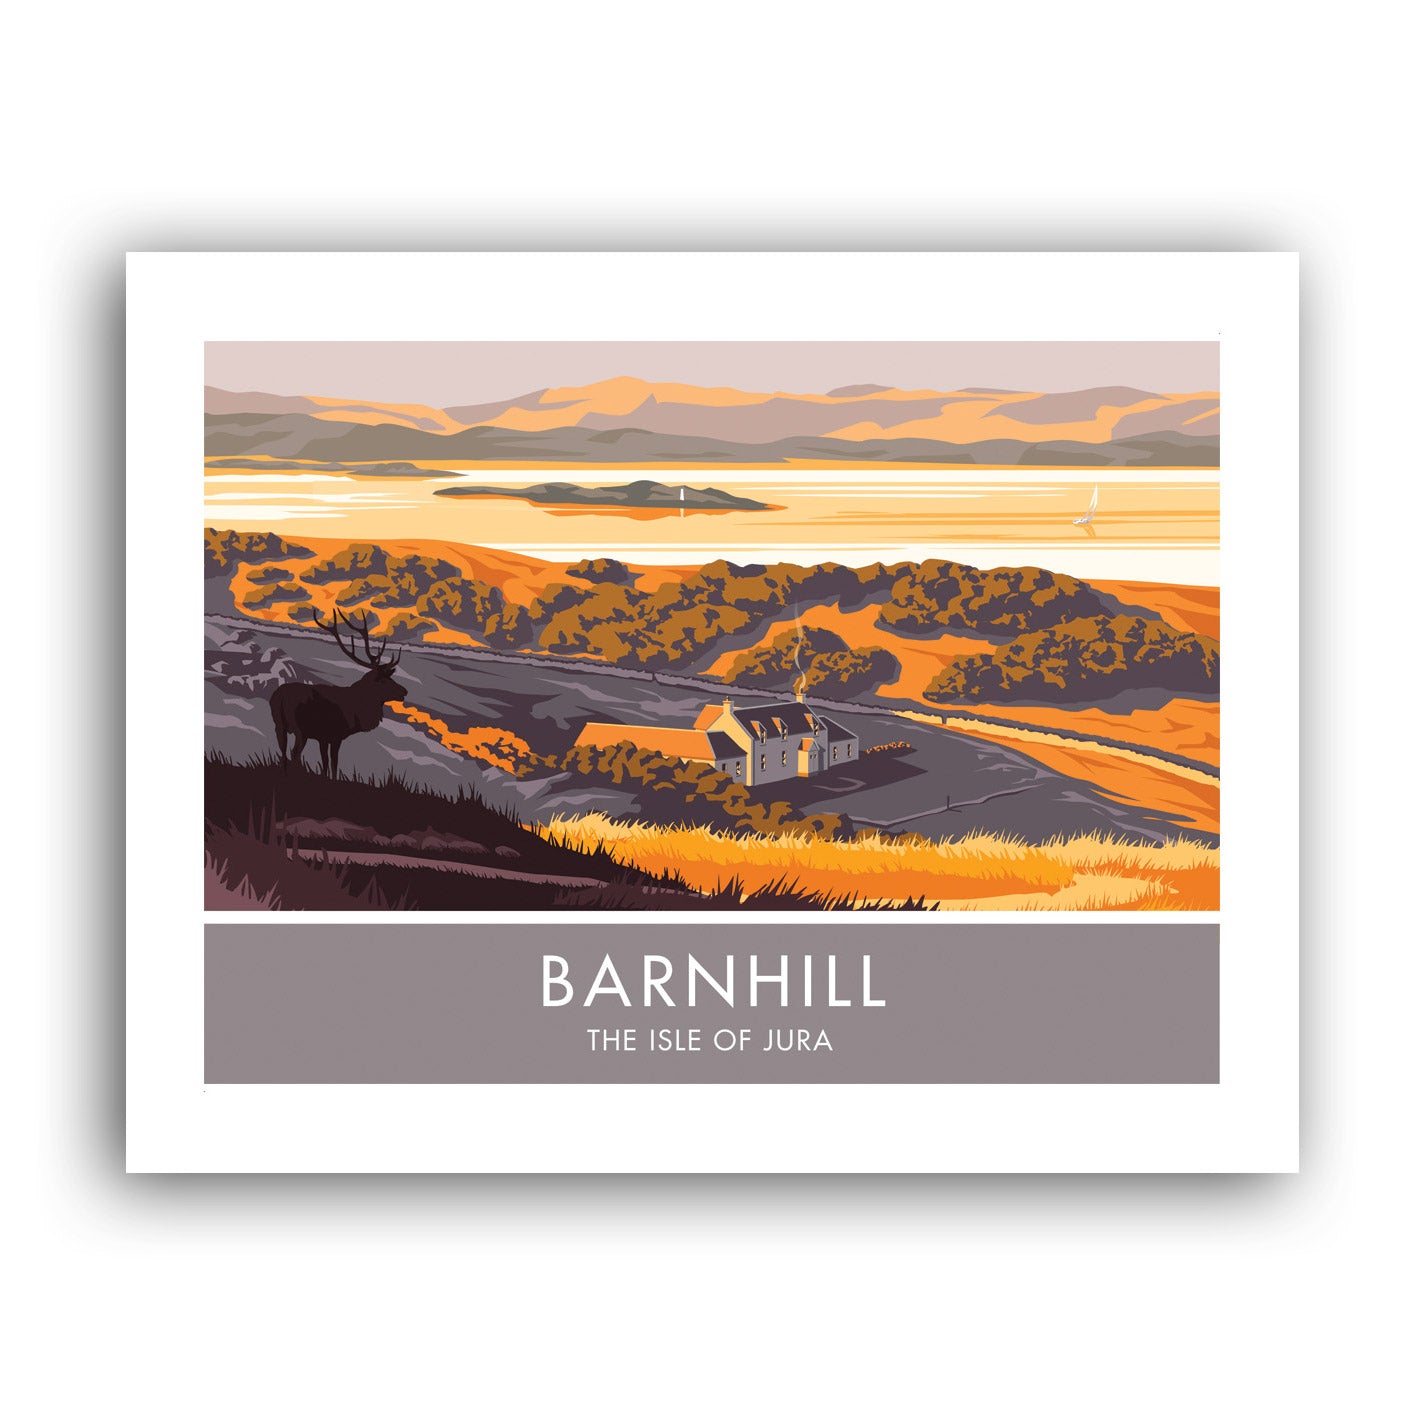 Barnhill Art Print